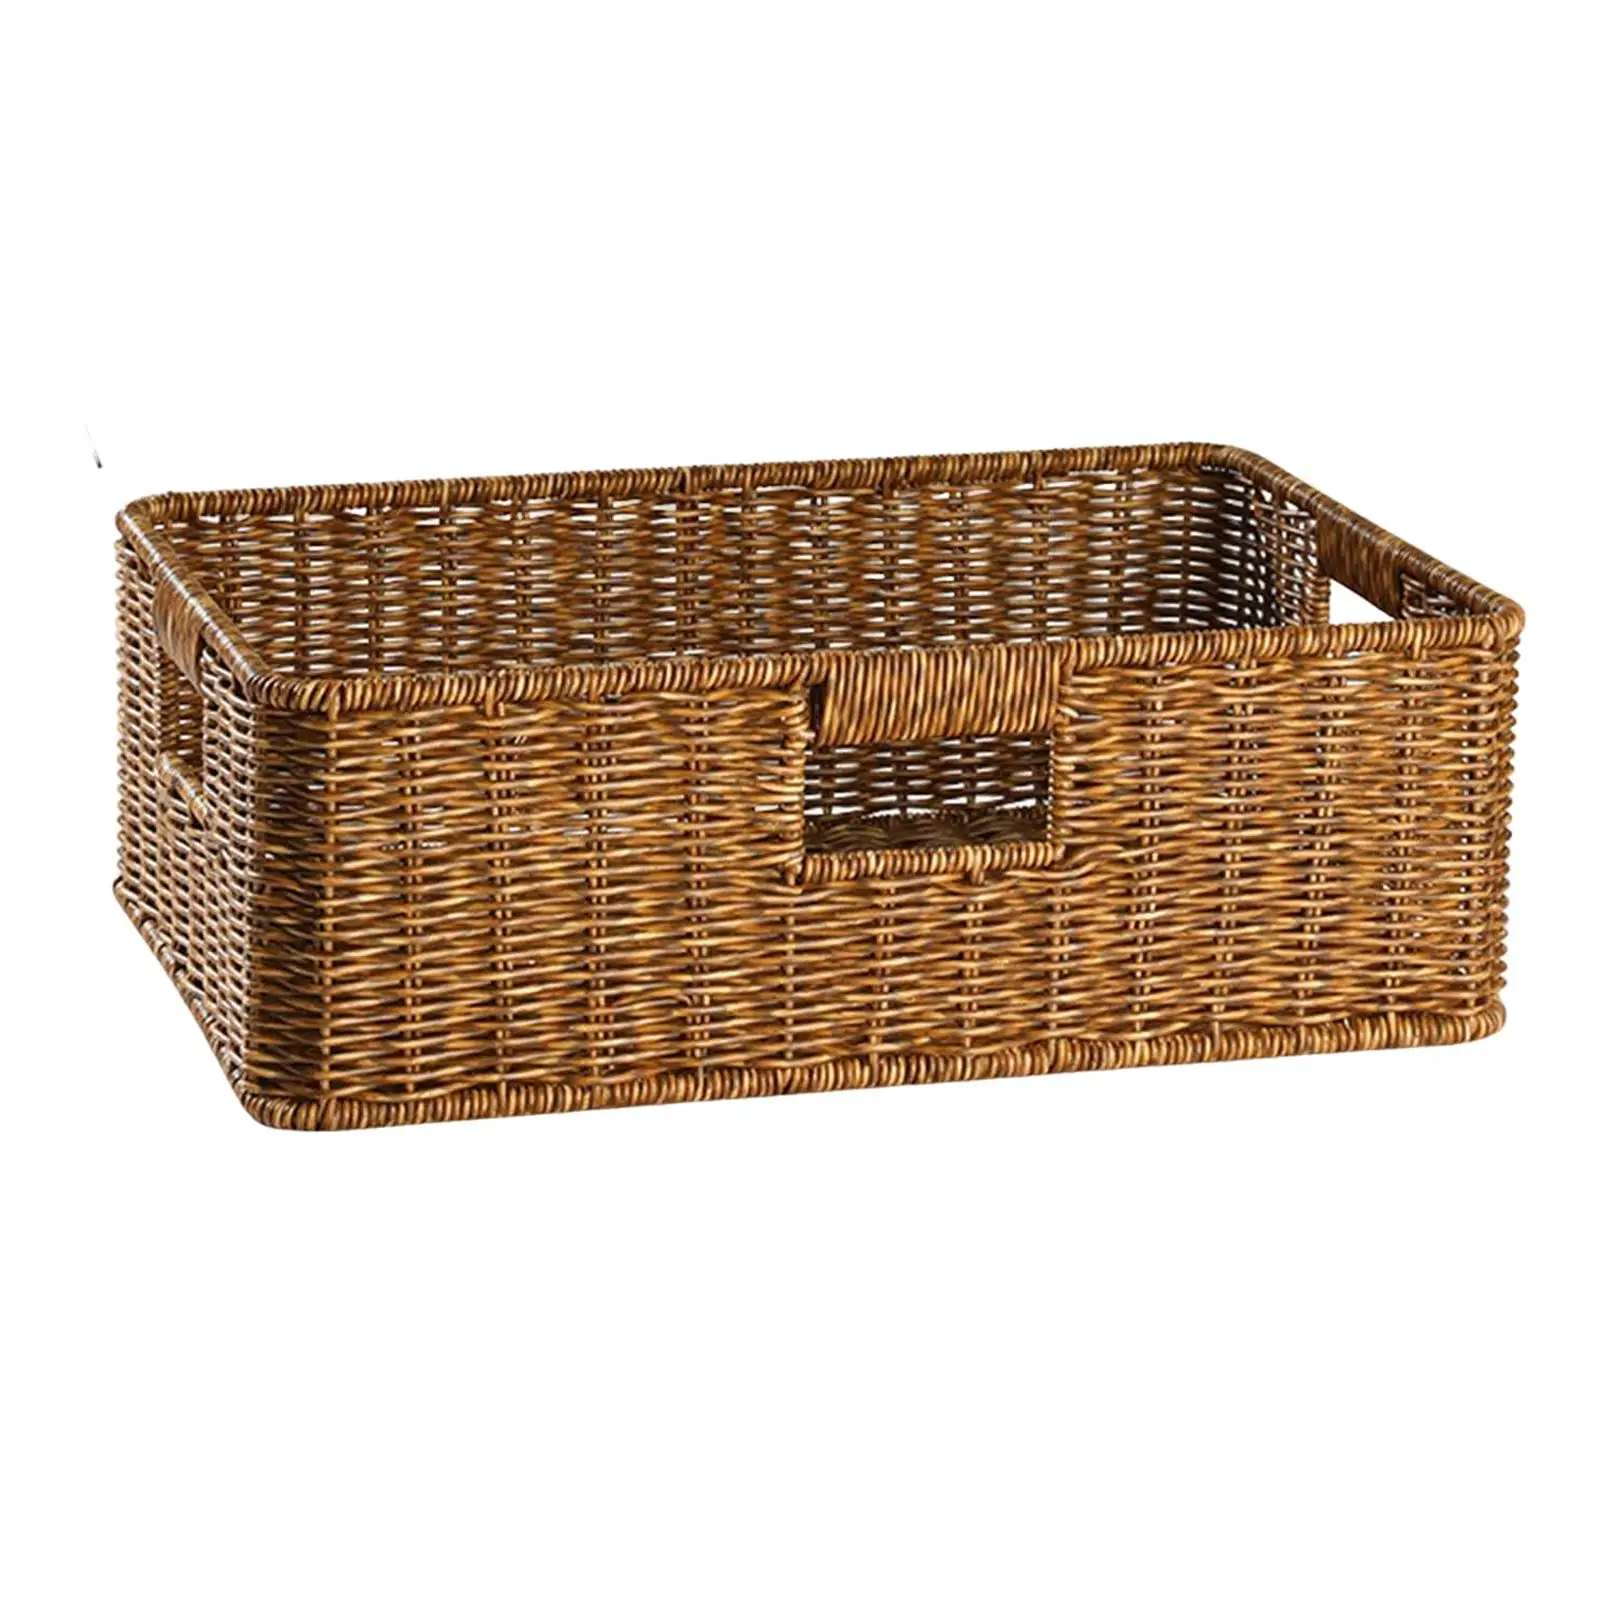 Hand Woven Storage Basket Built in Handles for Bathroom, Kitchen Handcrafted